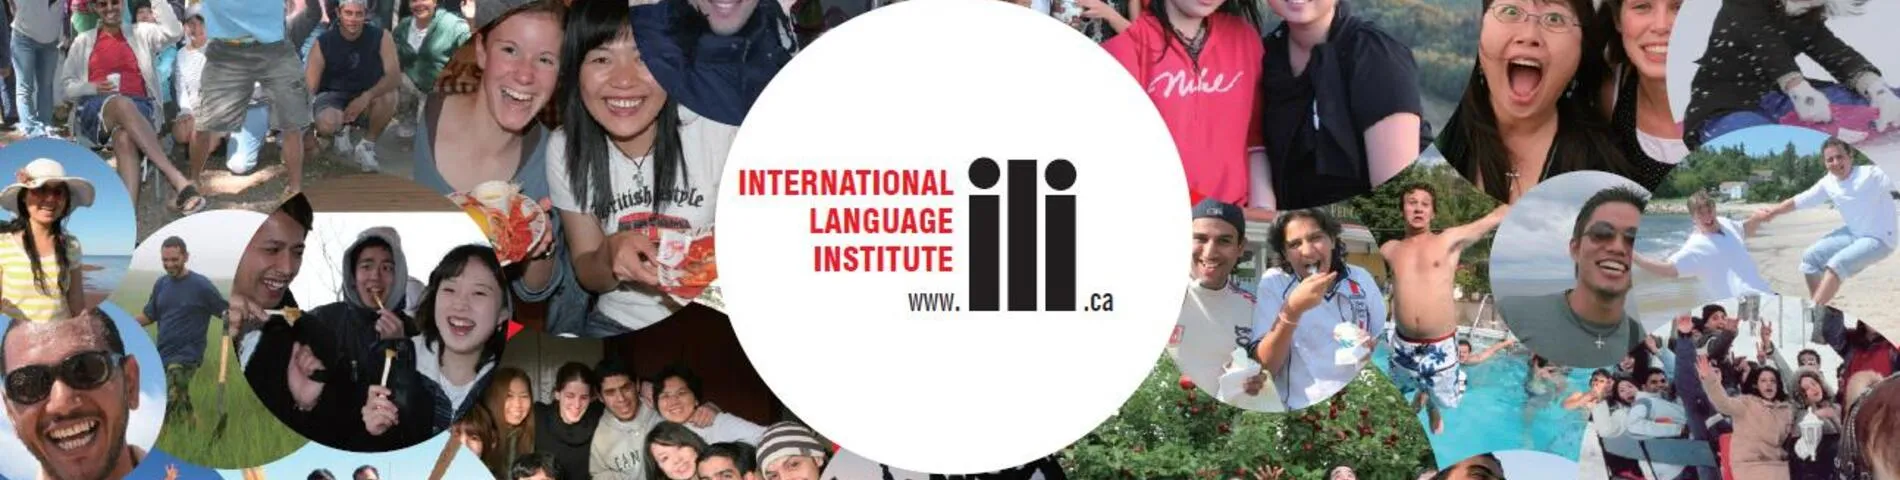 ILI - International Language Institute obrazek 1